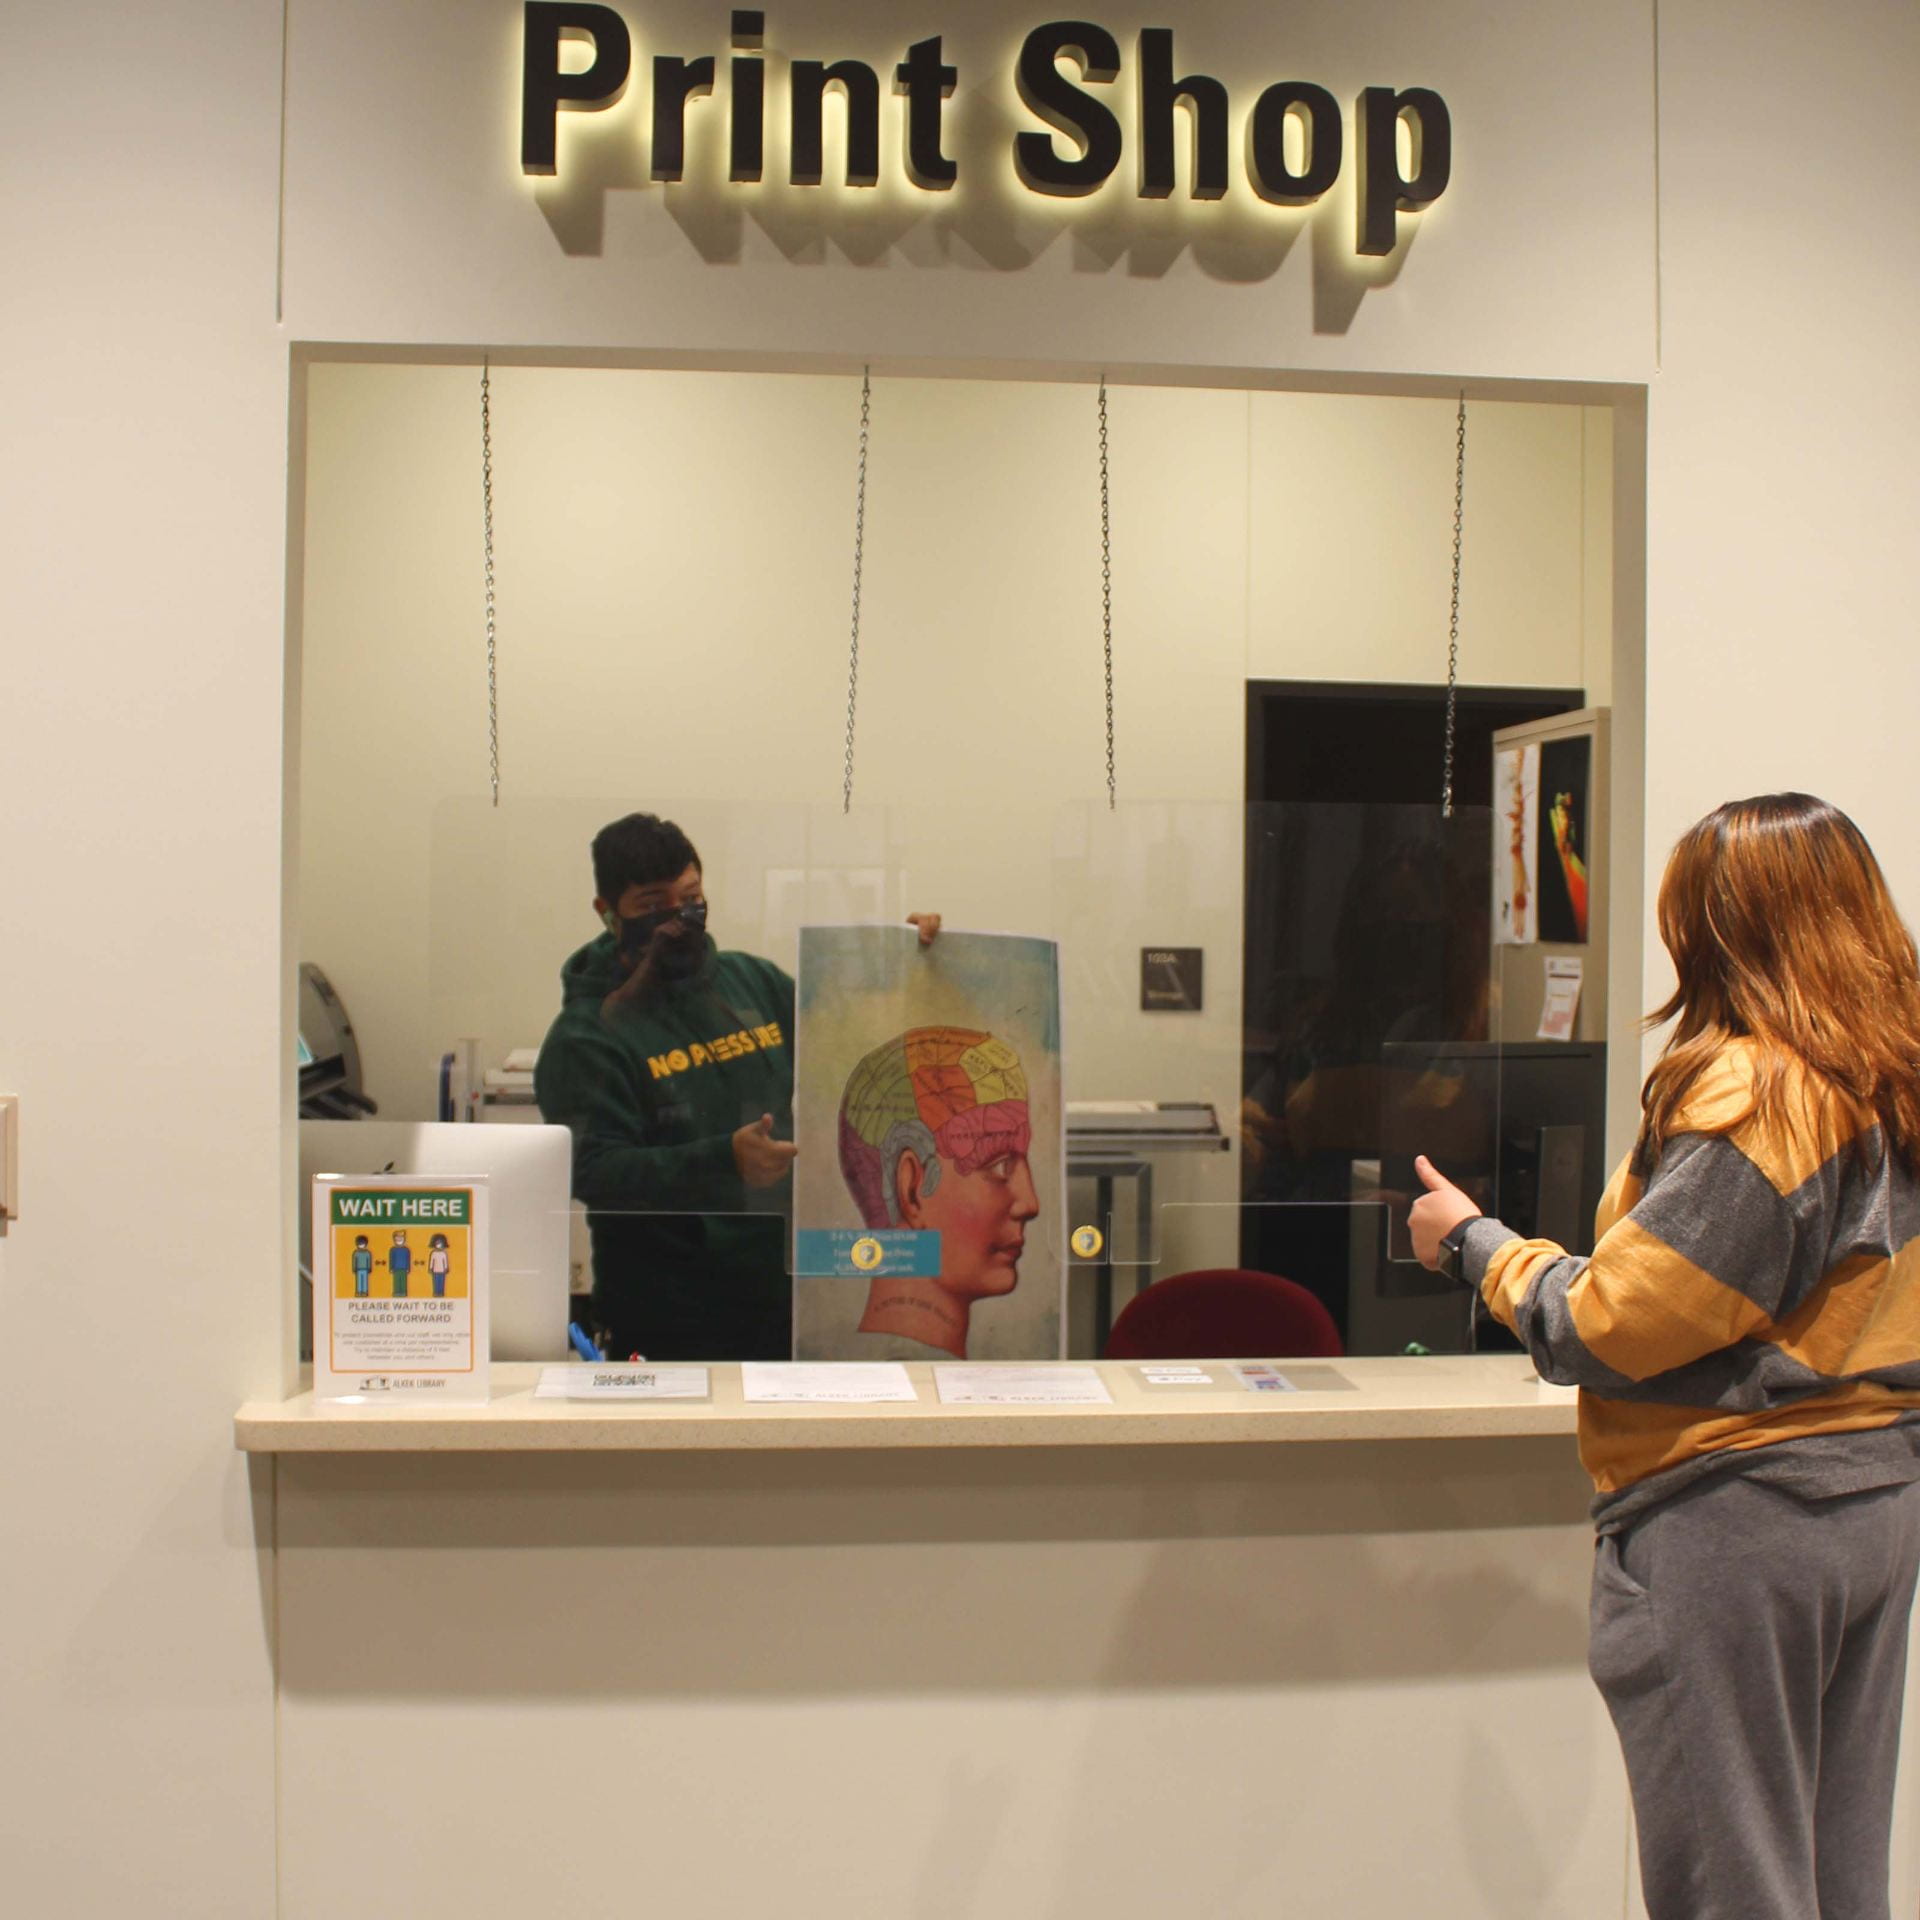 Print Shop 